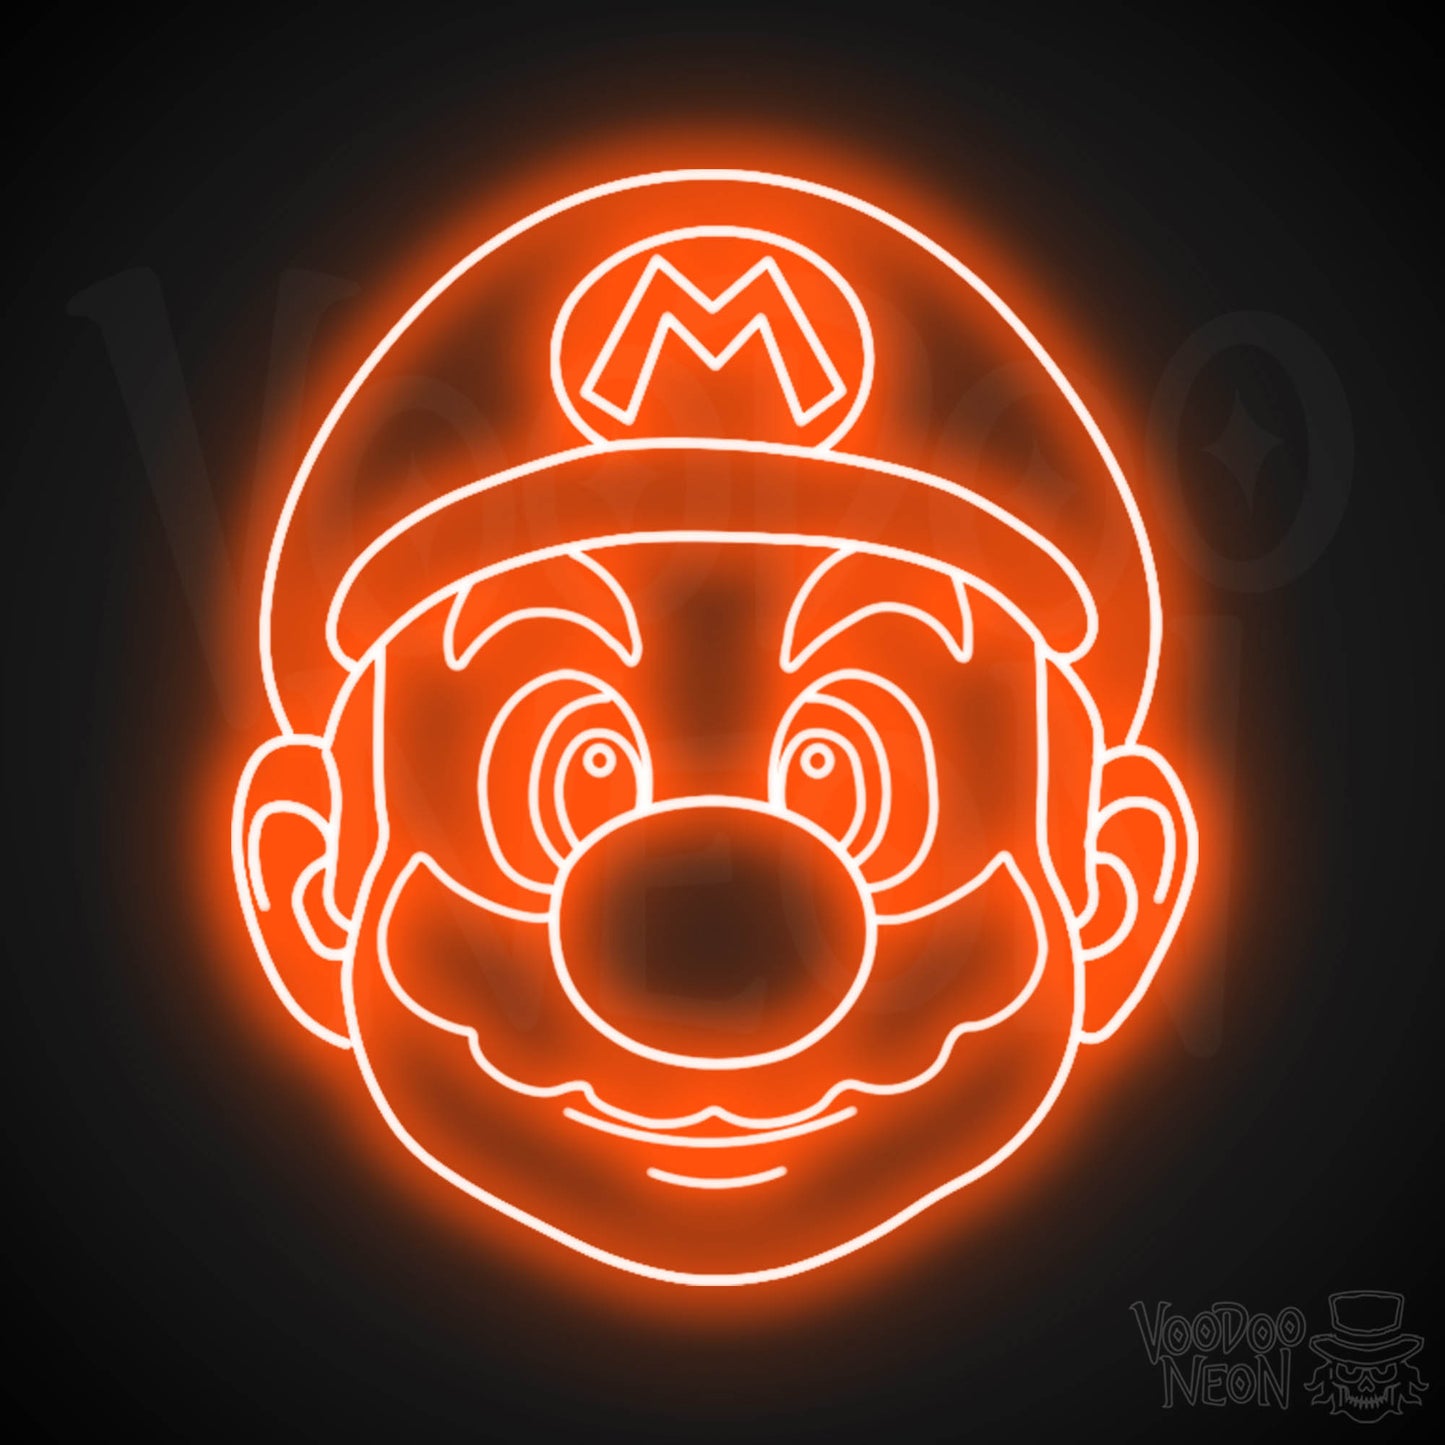 Mario Neon Sign - Mario Sign - Mario Wall Art - LED Neon Wall Art - Color Orange